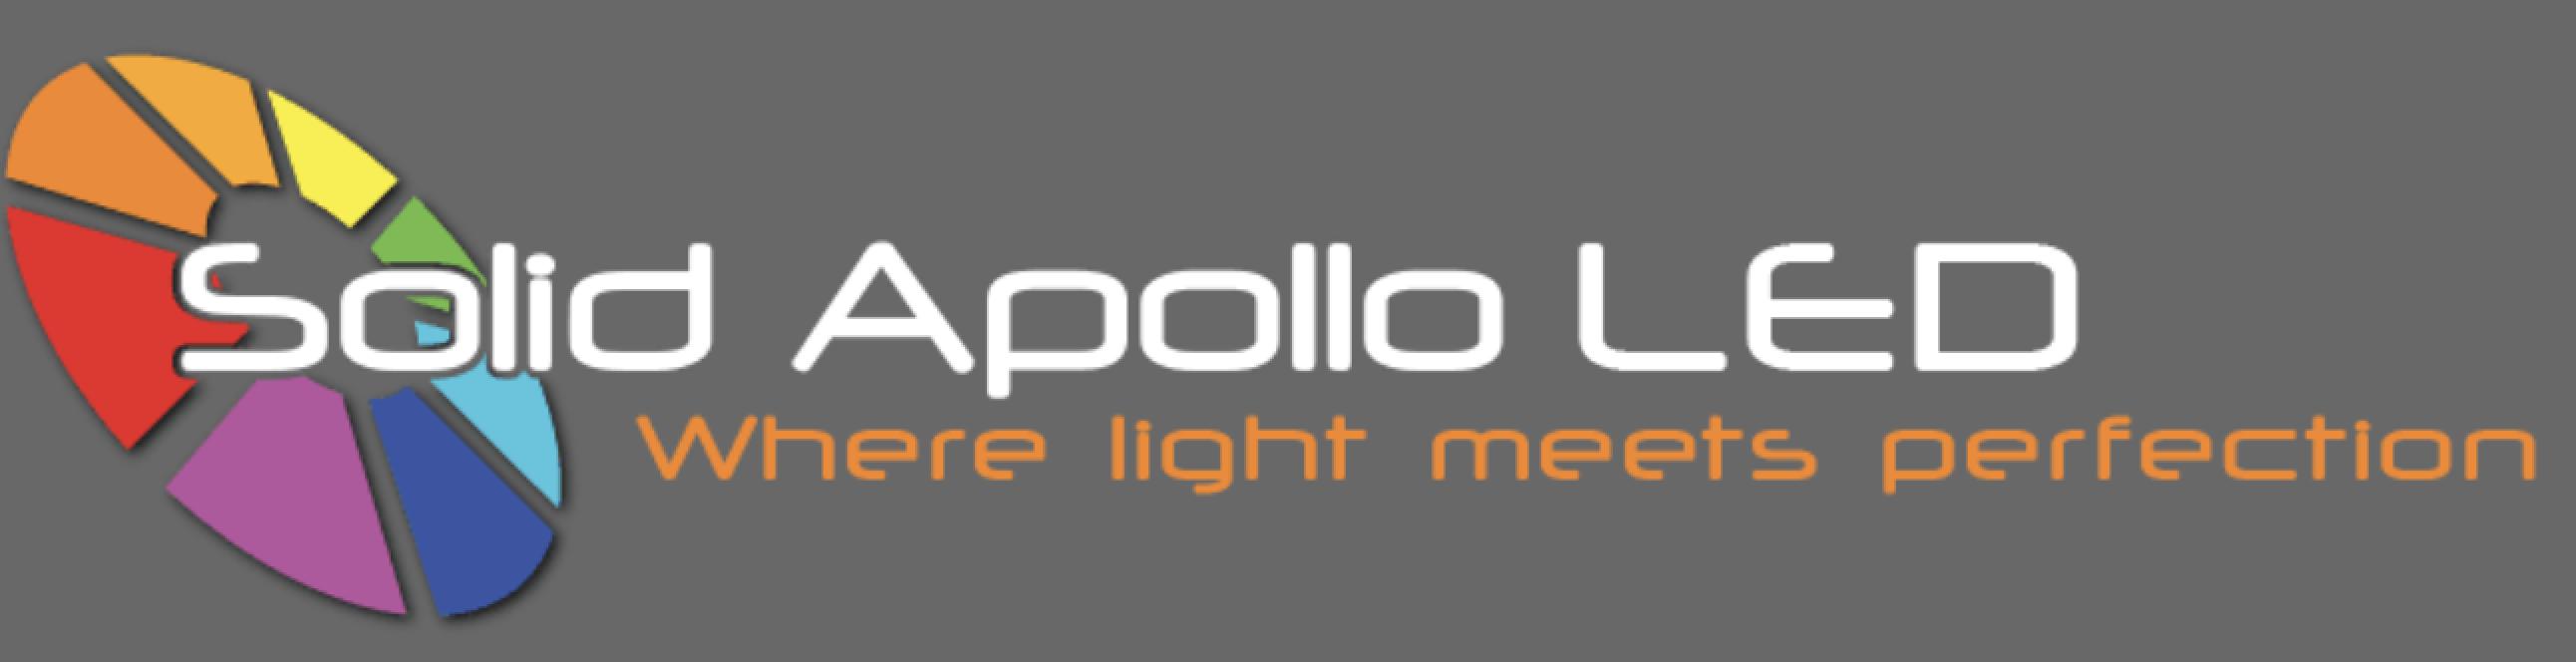 Solid Apollo LED